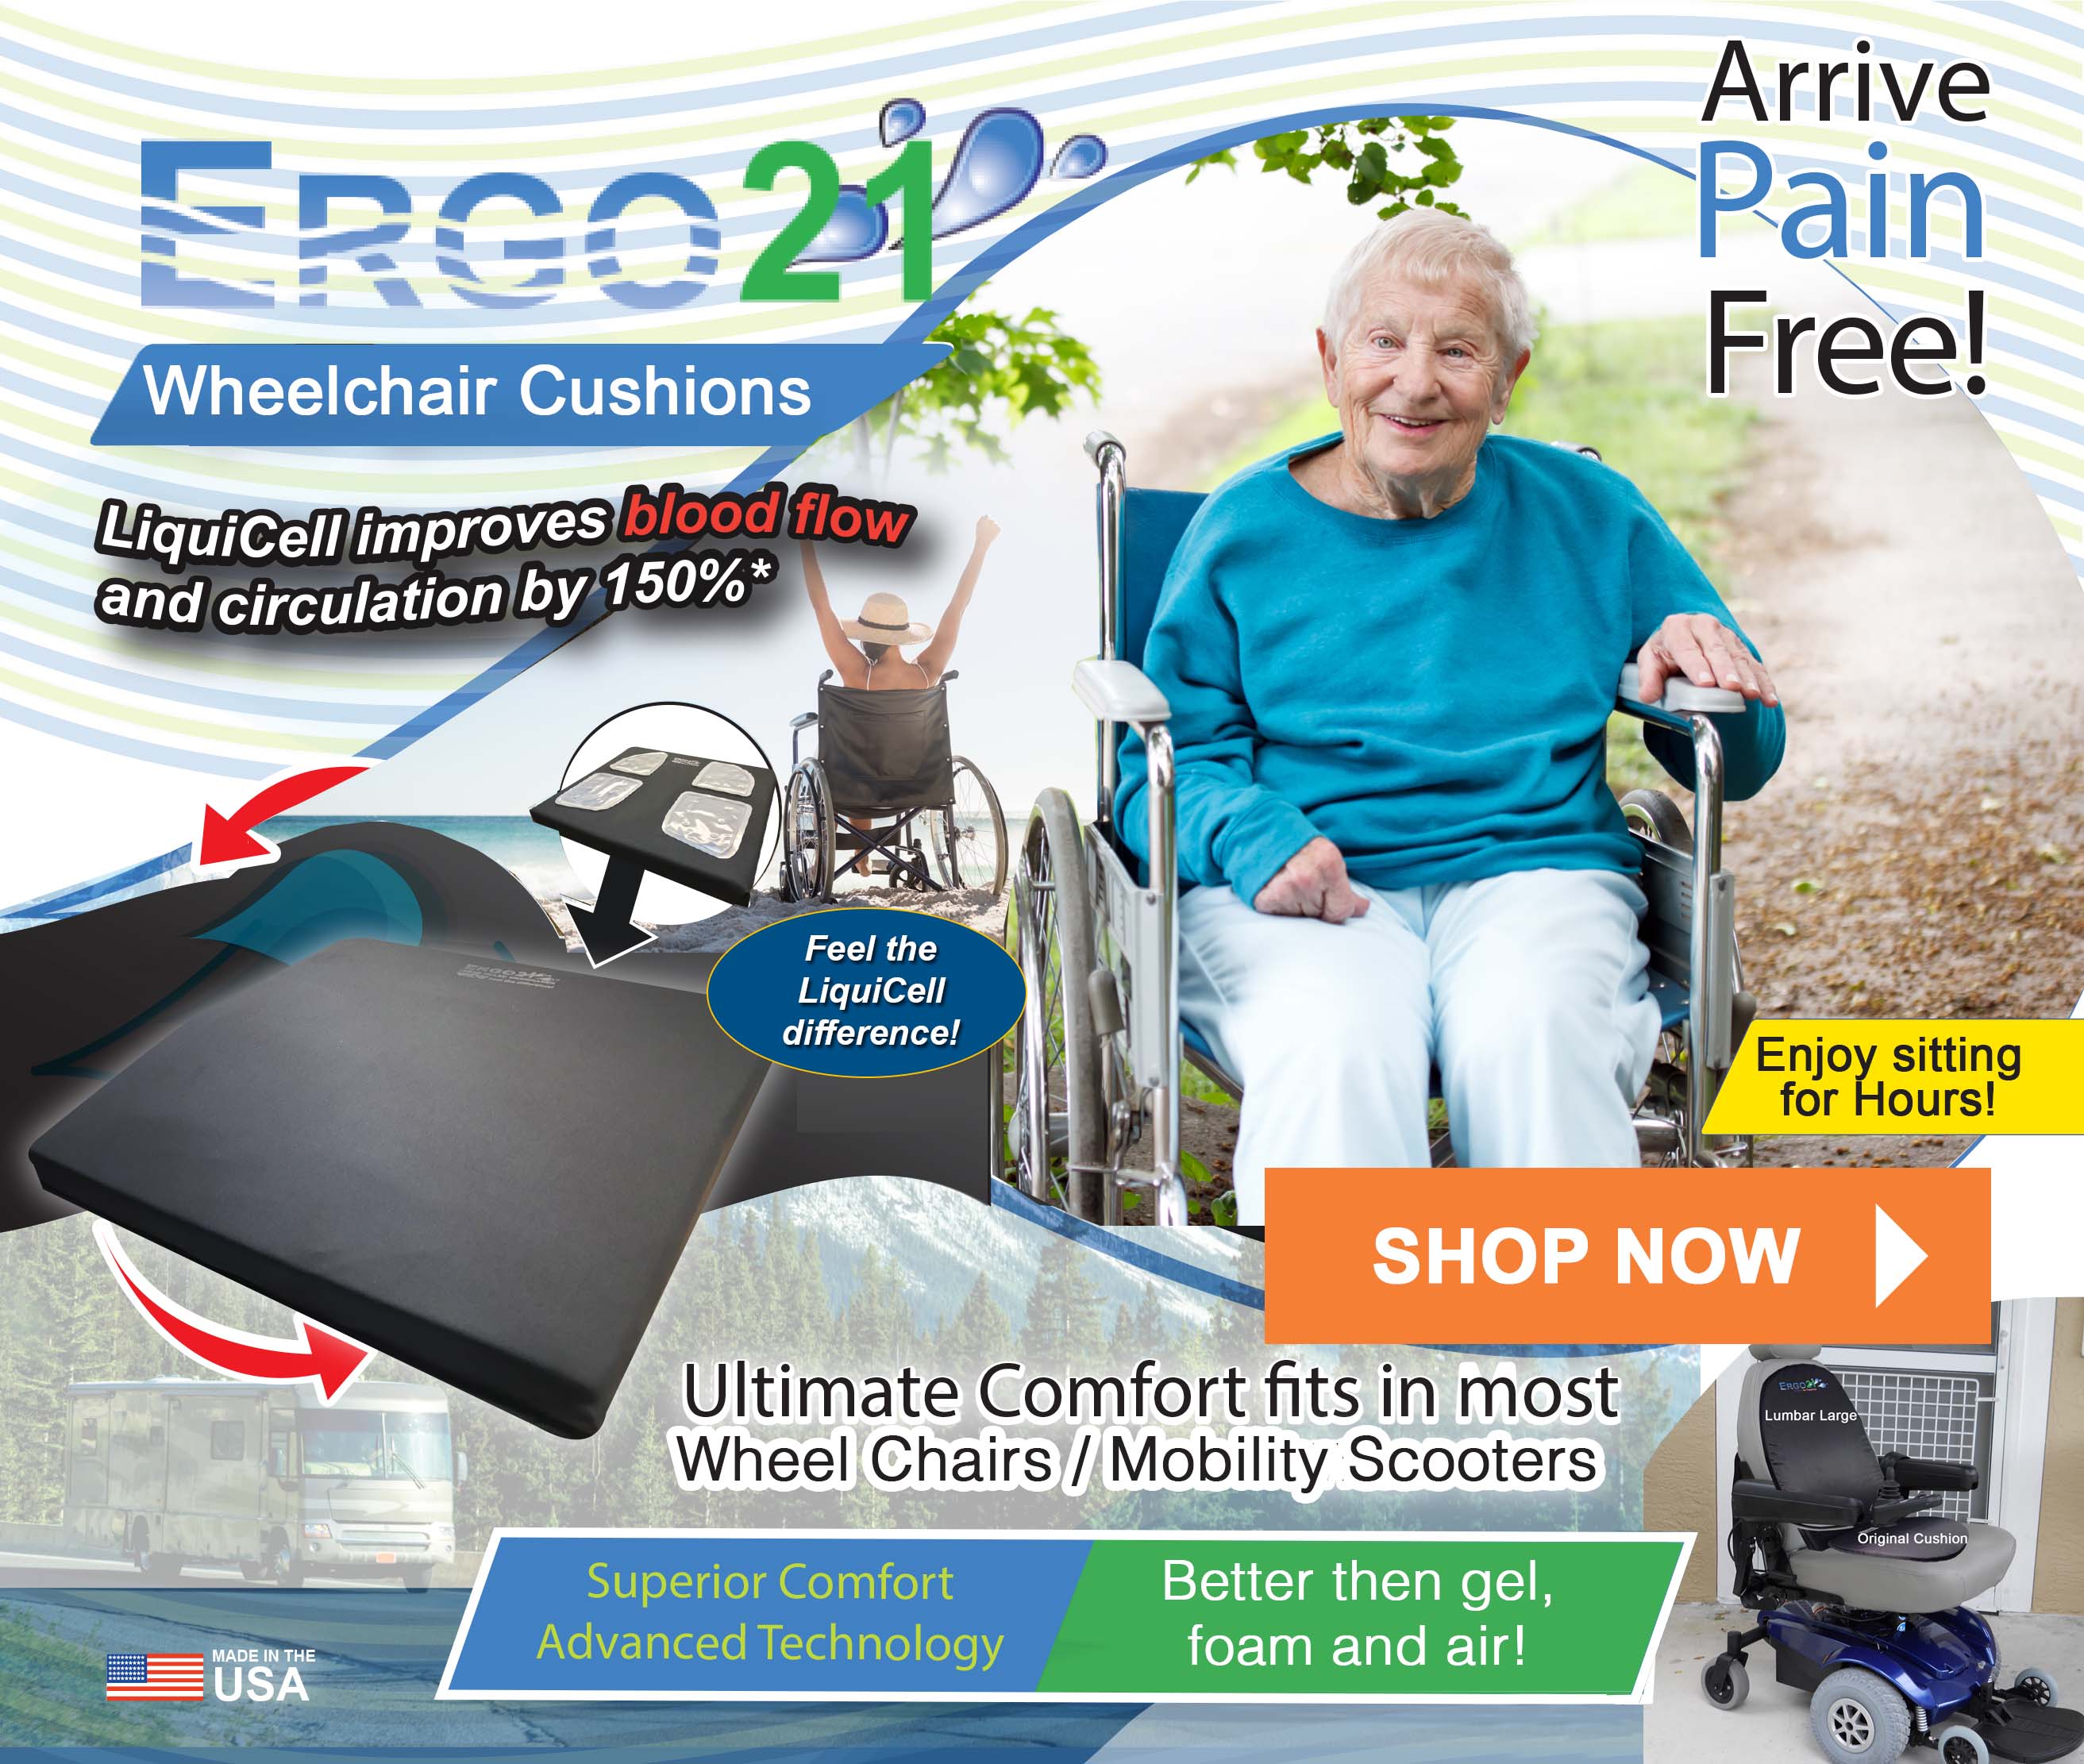 https://www.ergo21.com/wp-content/uploads/2018/08/wheelchair.jpg